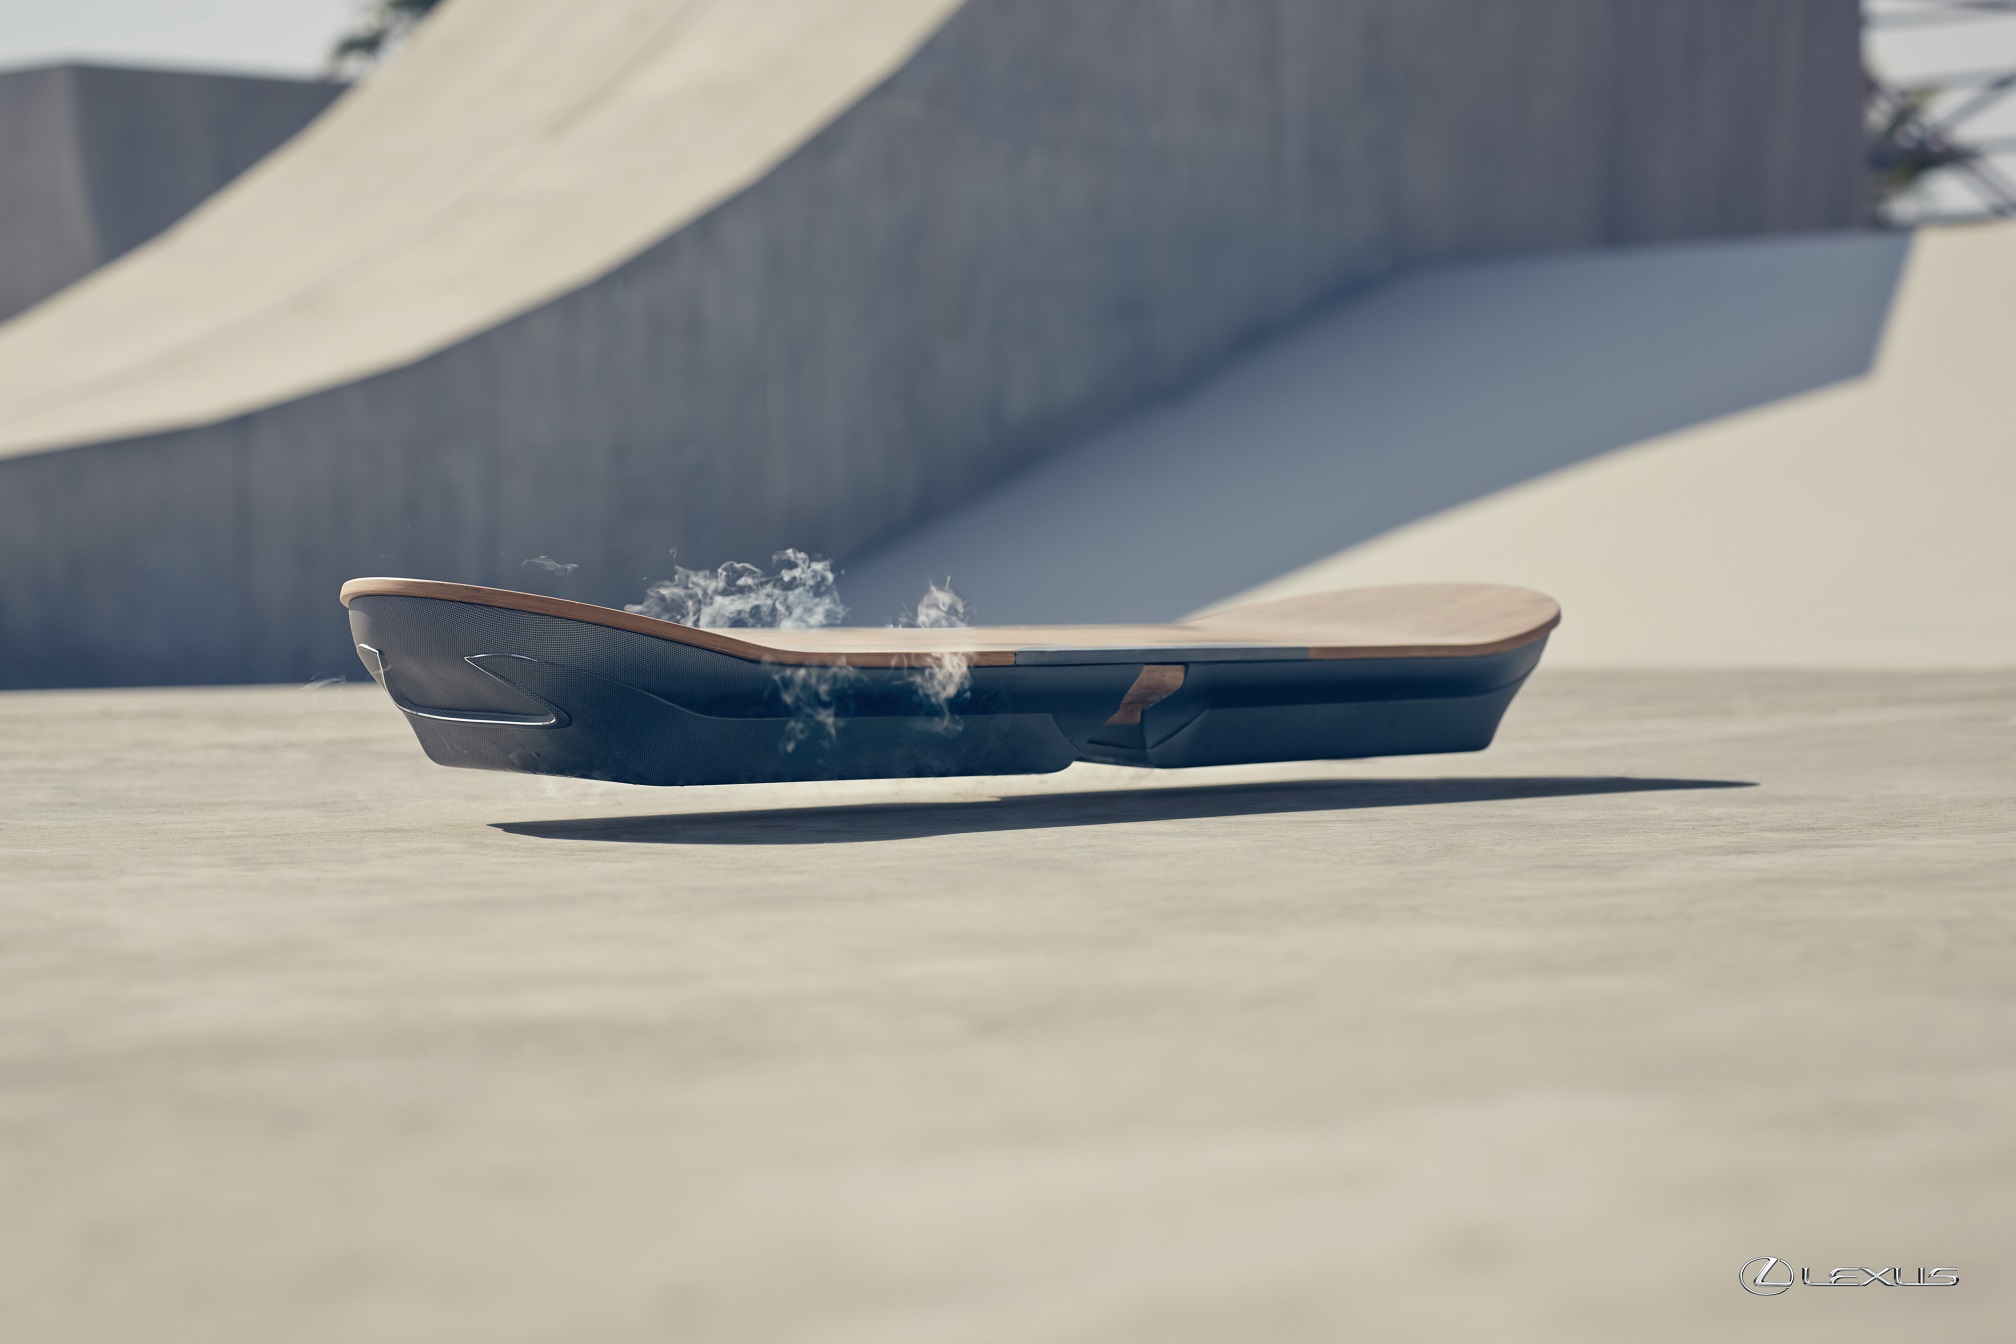 Lexus creates advanced hoverboard
